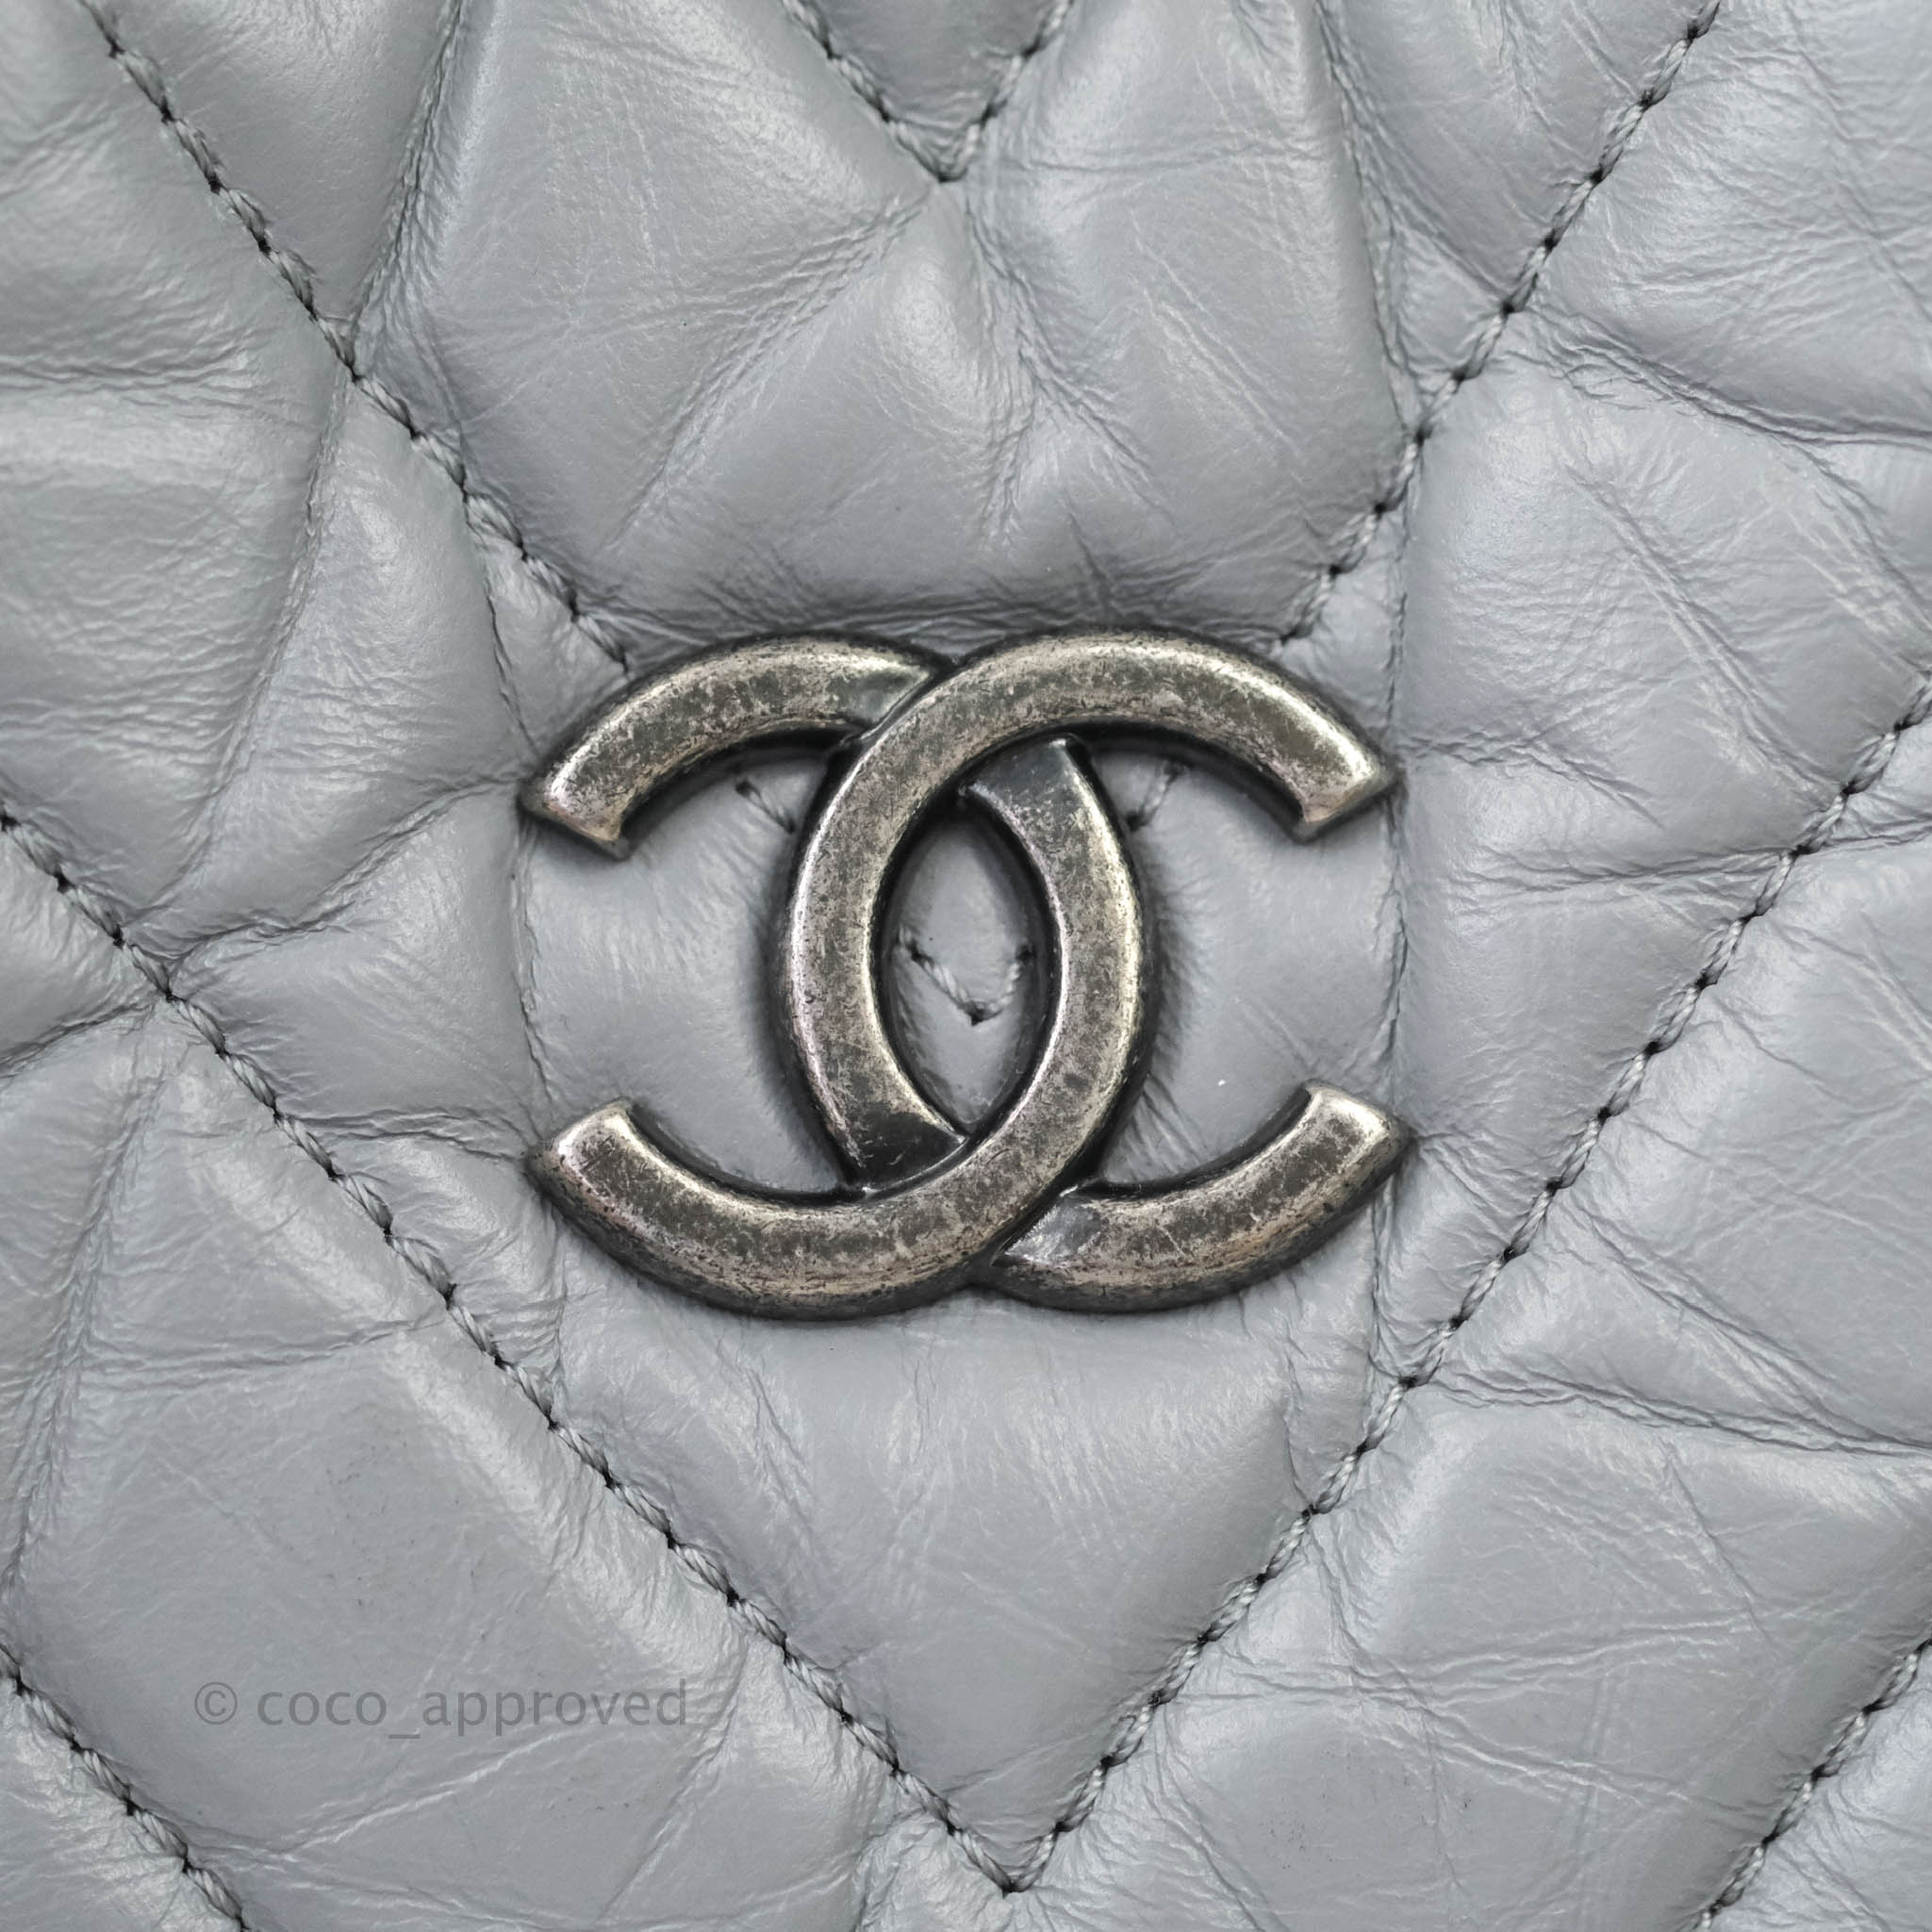 Chanel Small Chevron Gabrielle Backpack Black Aged Calfskin – Coco